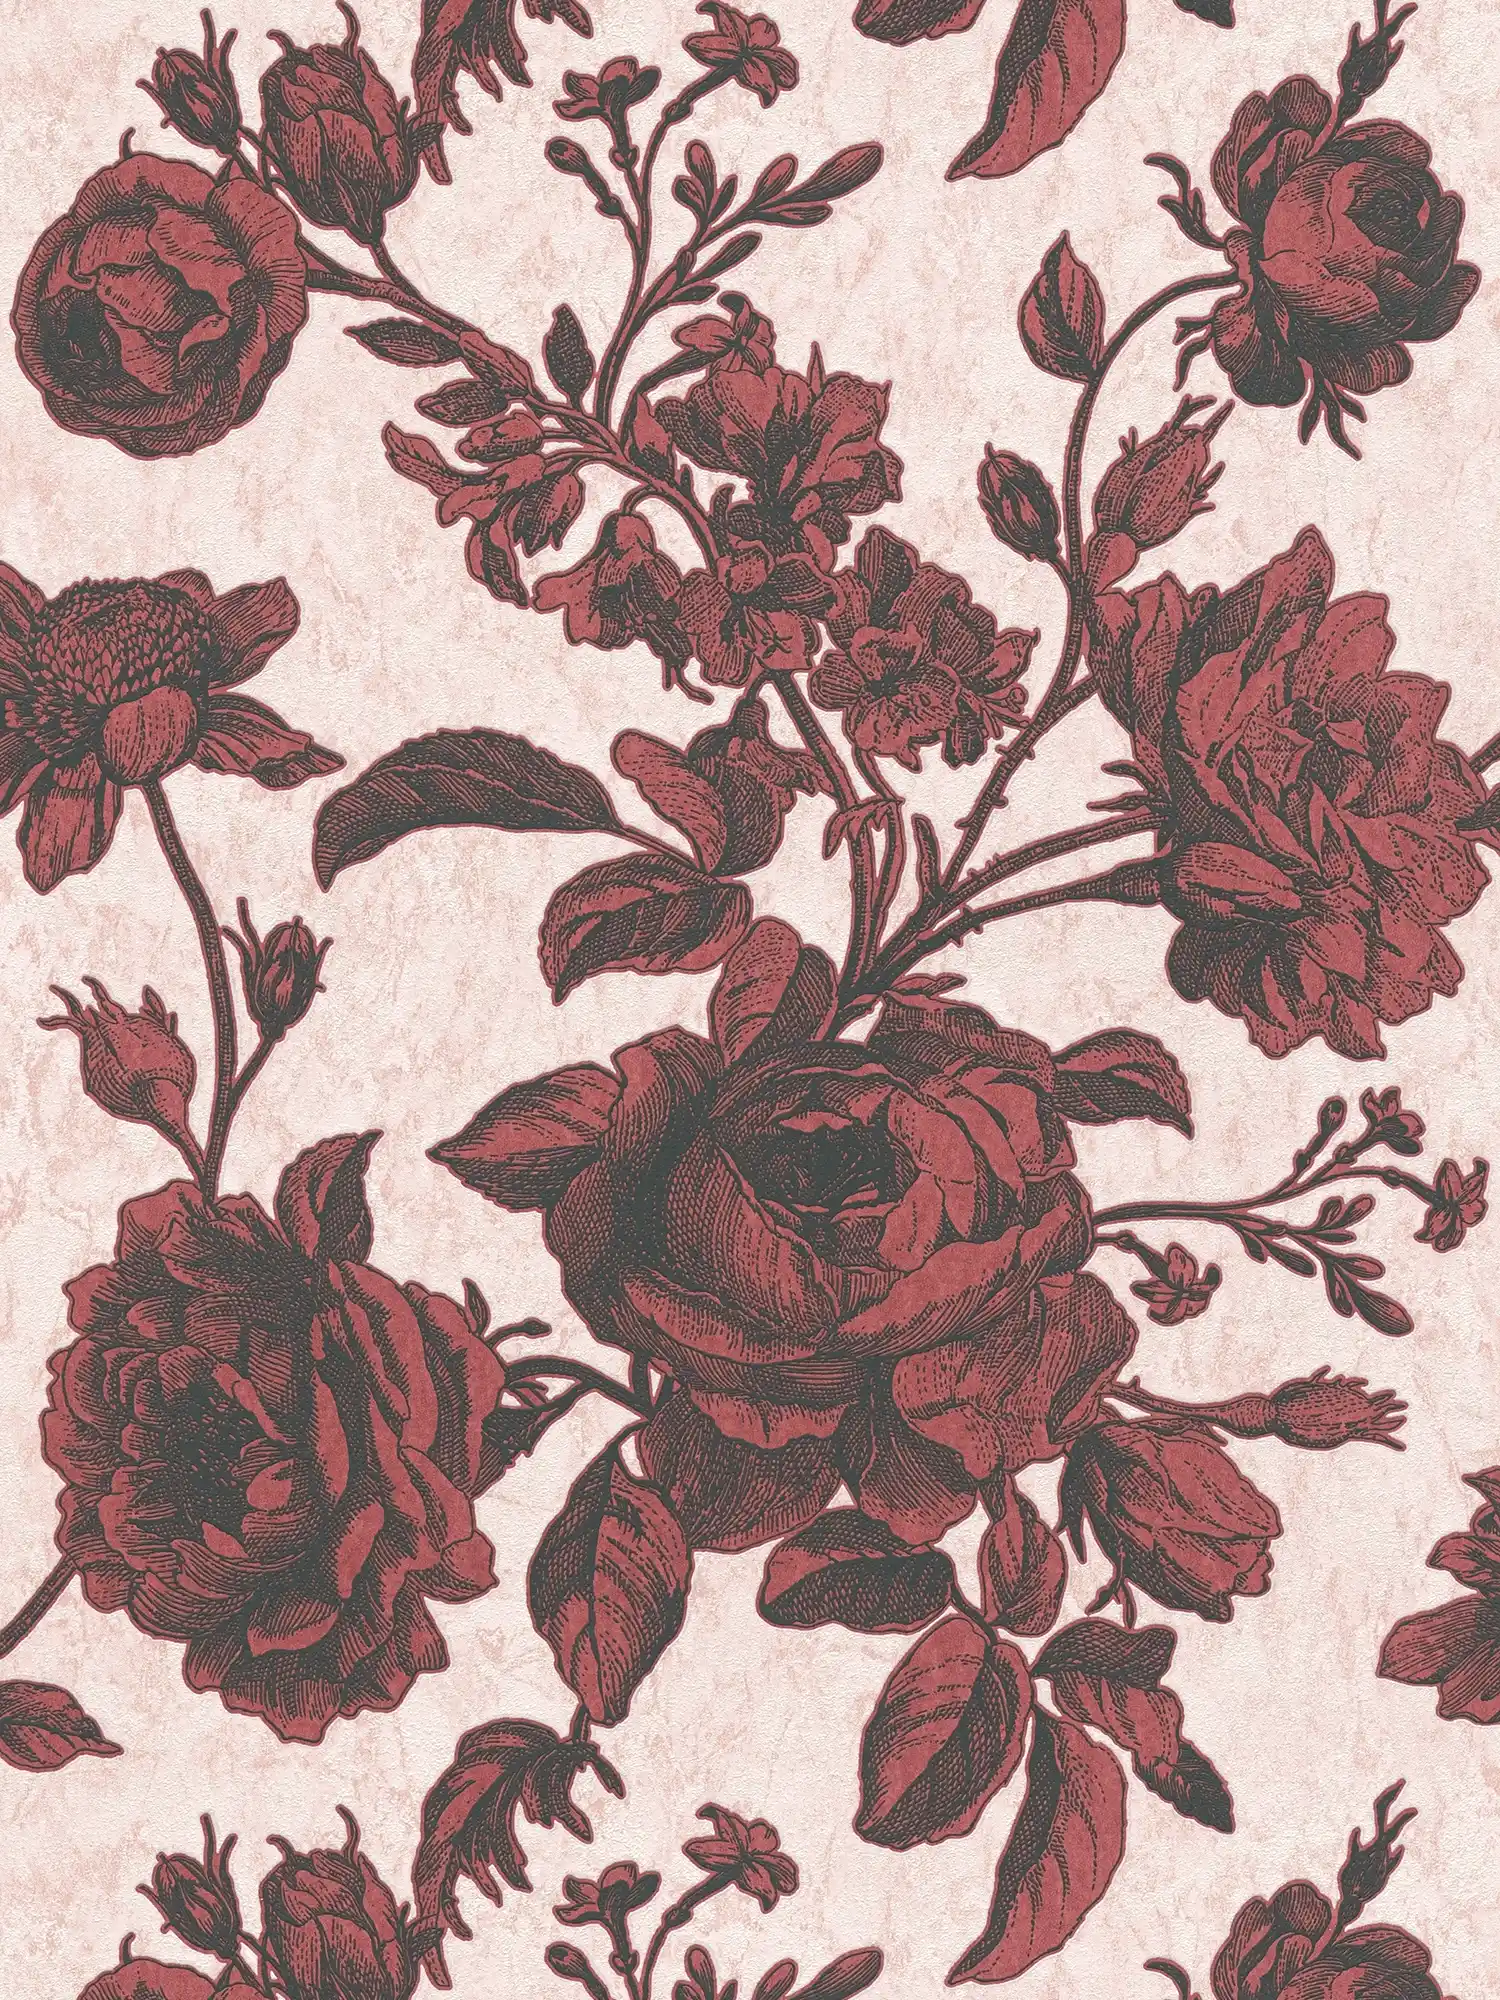 Rozen behang rood-zwart in vintage teken stijl - roze, rood
